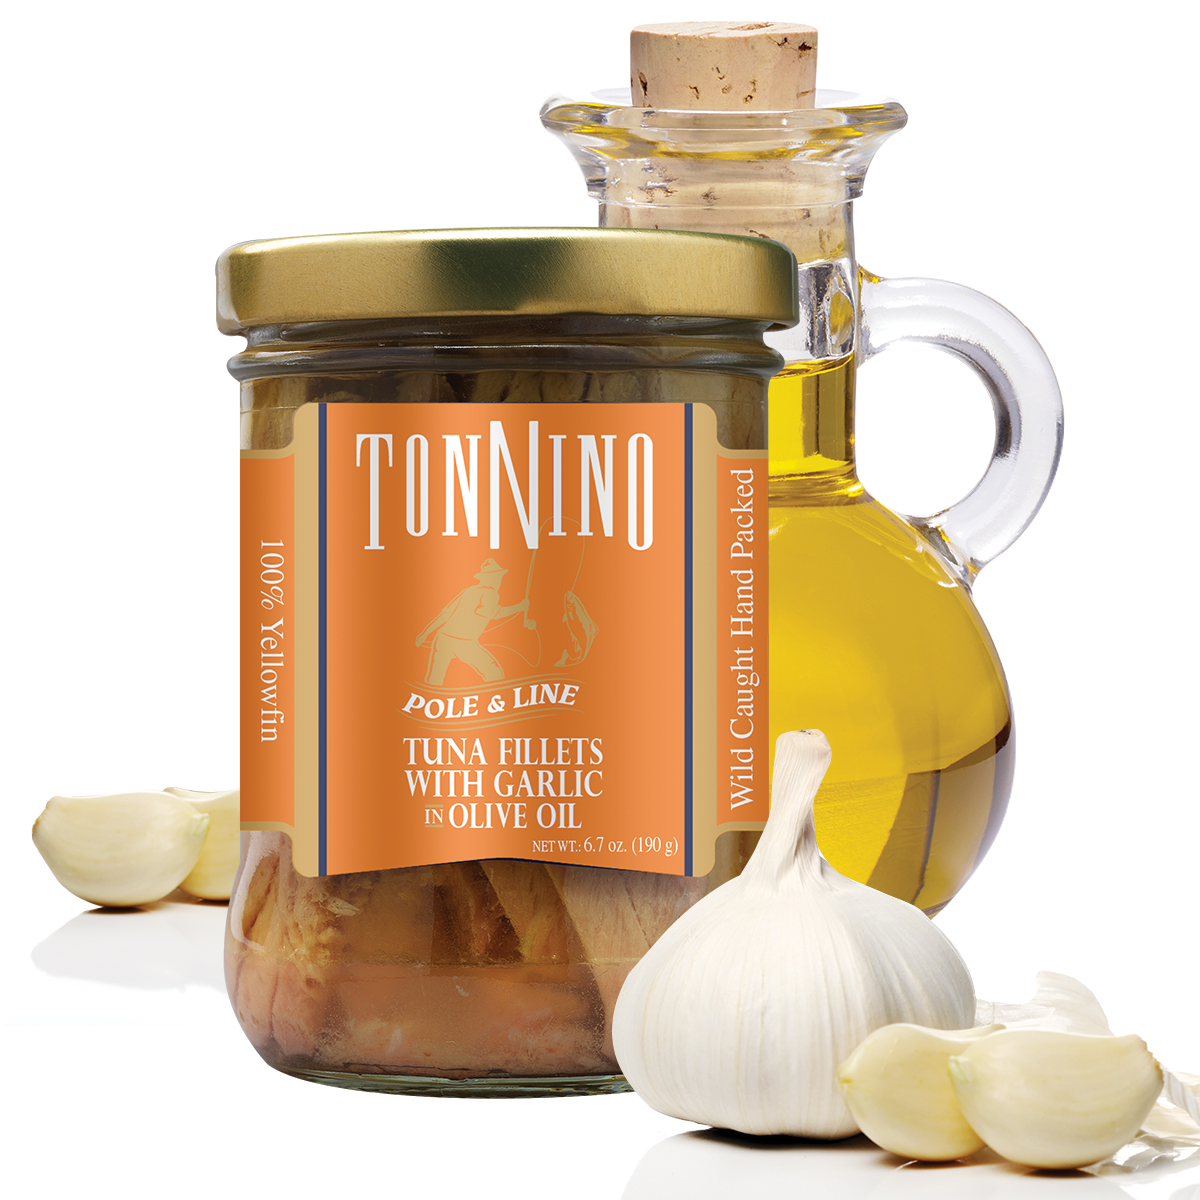 Tonnino Yellowfin Tuna Fillets With Garlic In Olive Oil, 6.7 oz